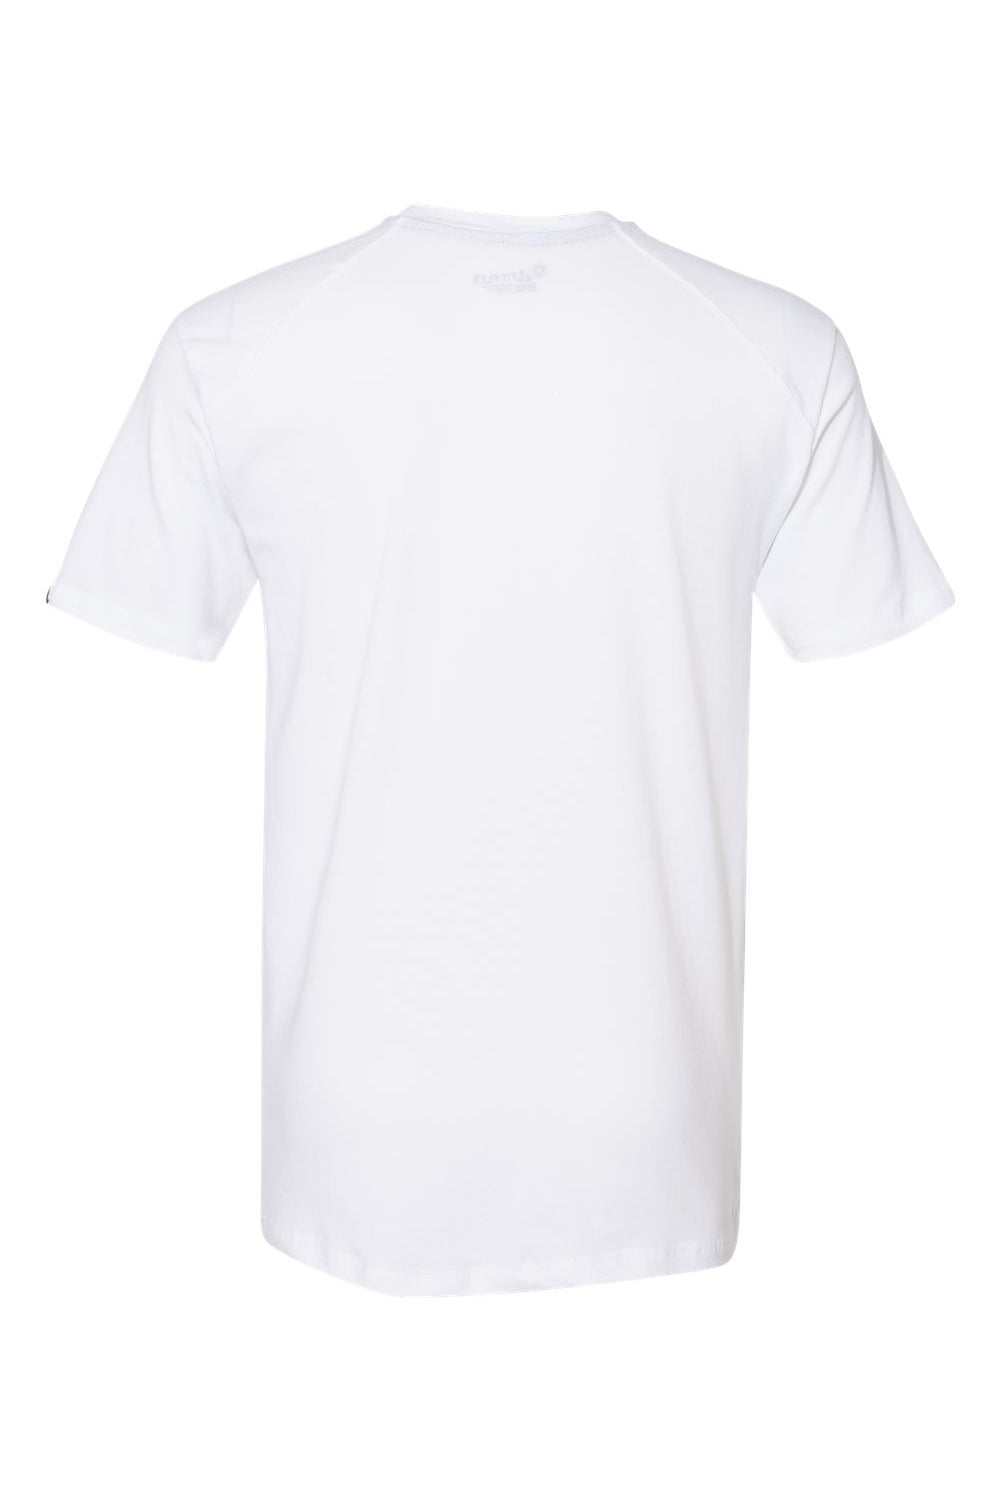 Badger 1000 Mens FitFlex Performance Moisture Wicking Short Sleeve Crewneck T-Shirt White Flat Back